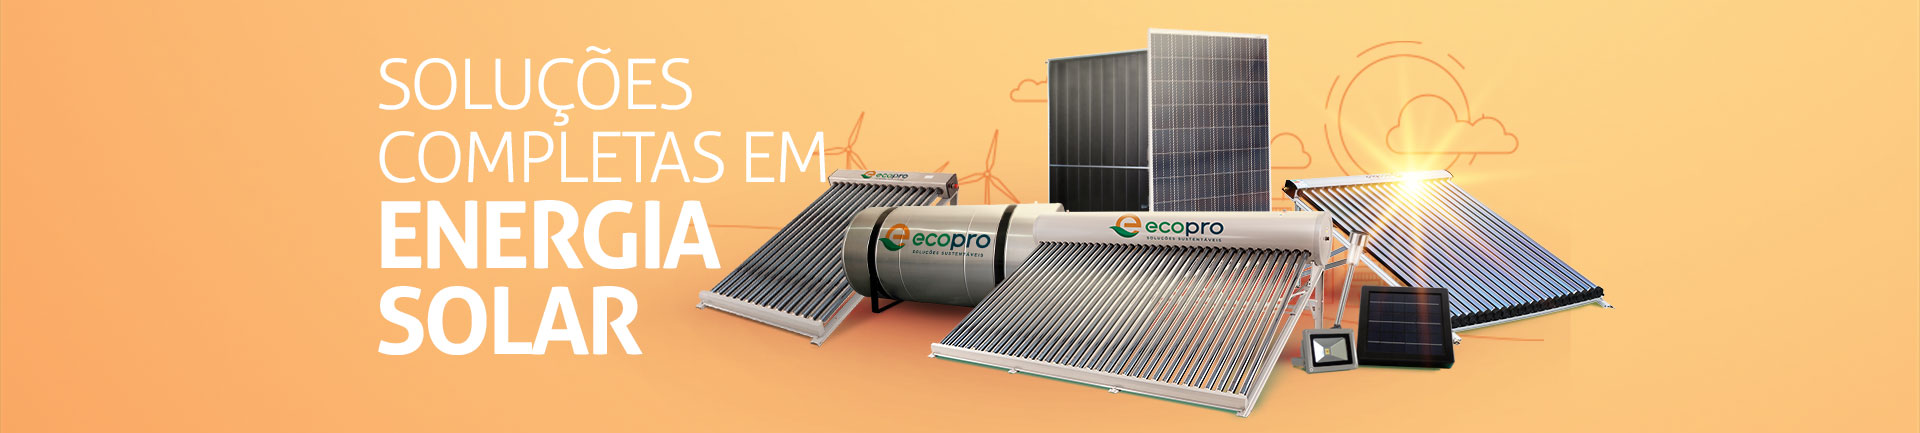 Ecopro Soluções em Energia Solar